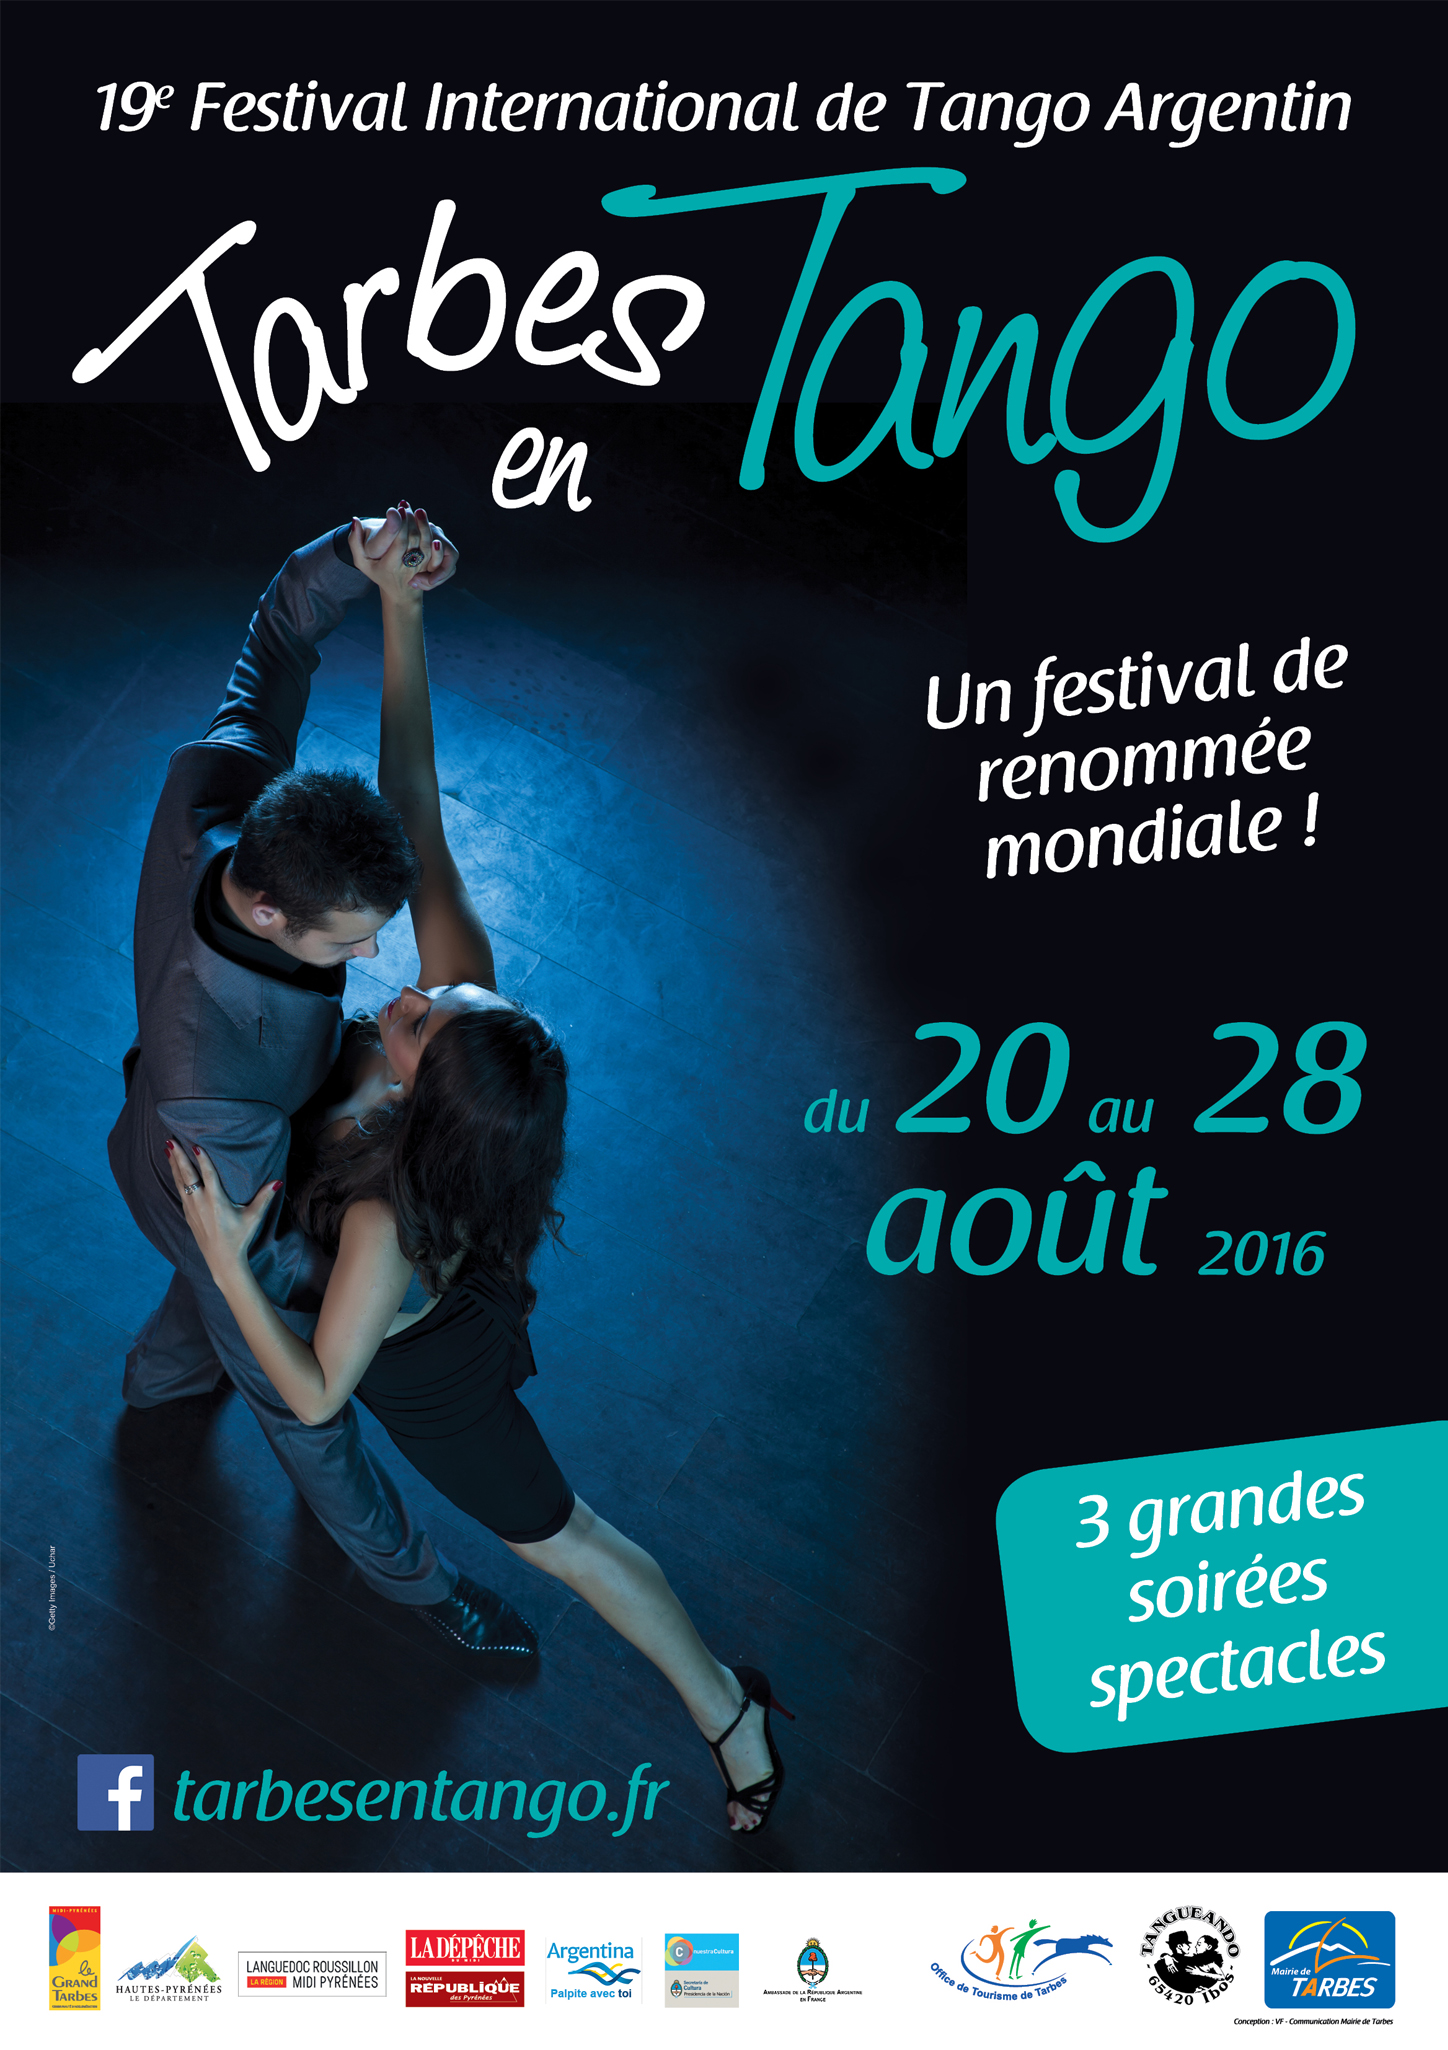 Festival Tarbes en Tango - Du 20 au 28 août 2016 - Région Occitanie /  Pyrénées-Méditerranée